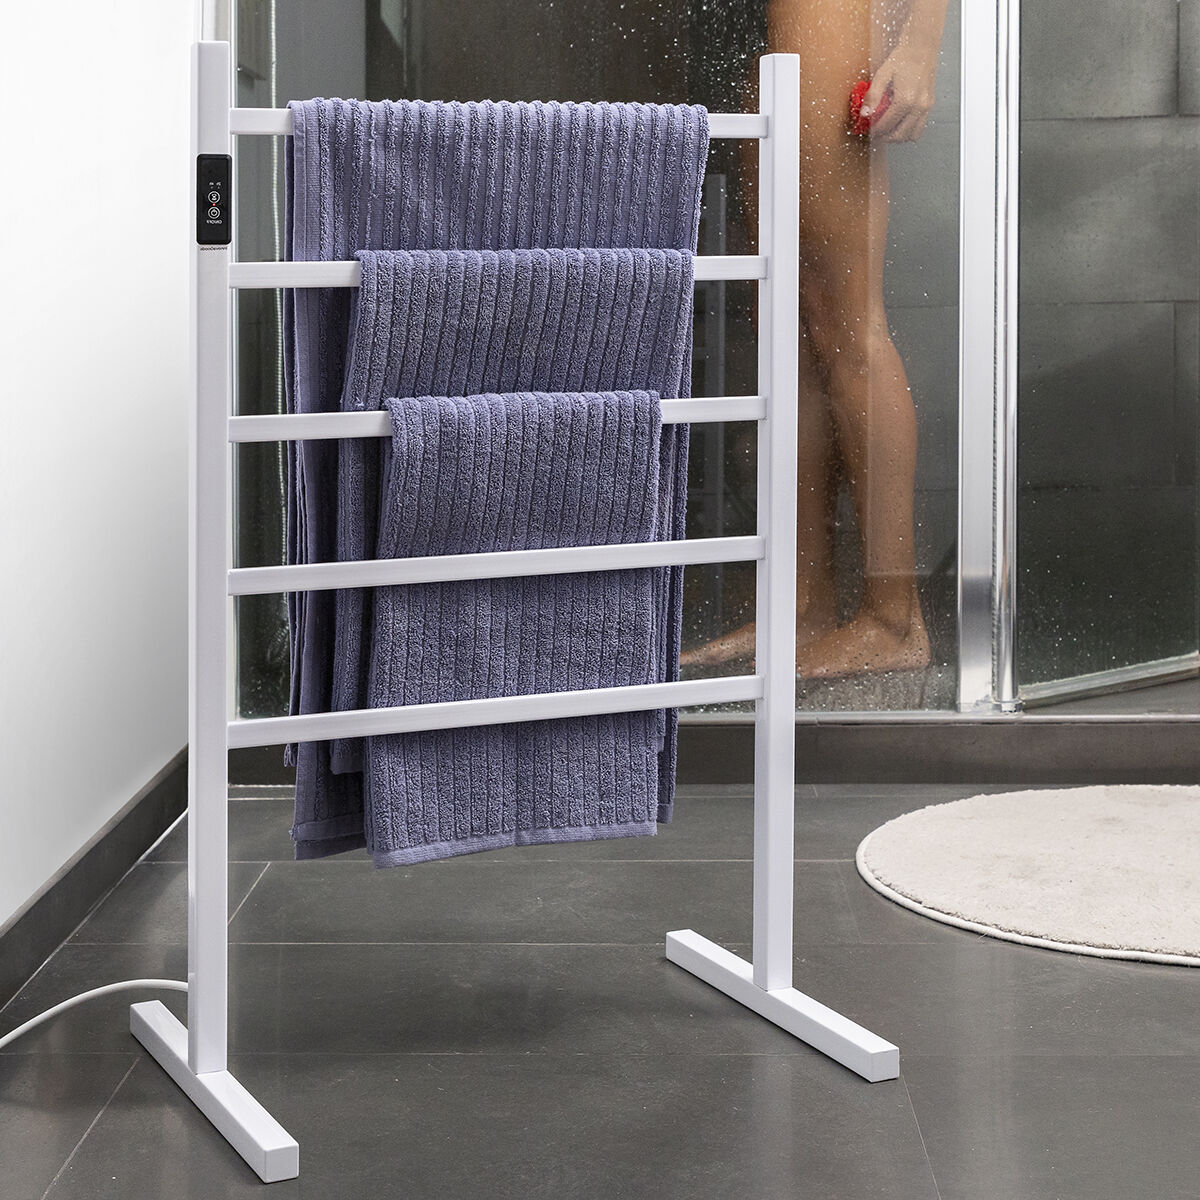 Ventajas de tener un toallero eléctrico - Blog de Worten